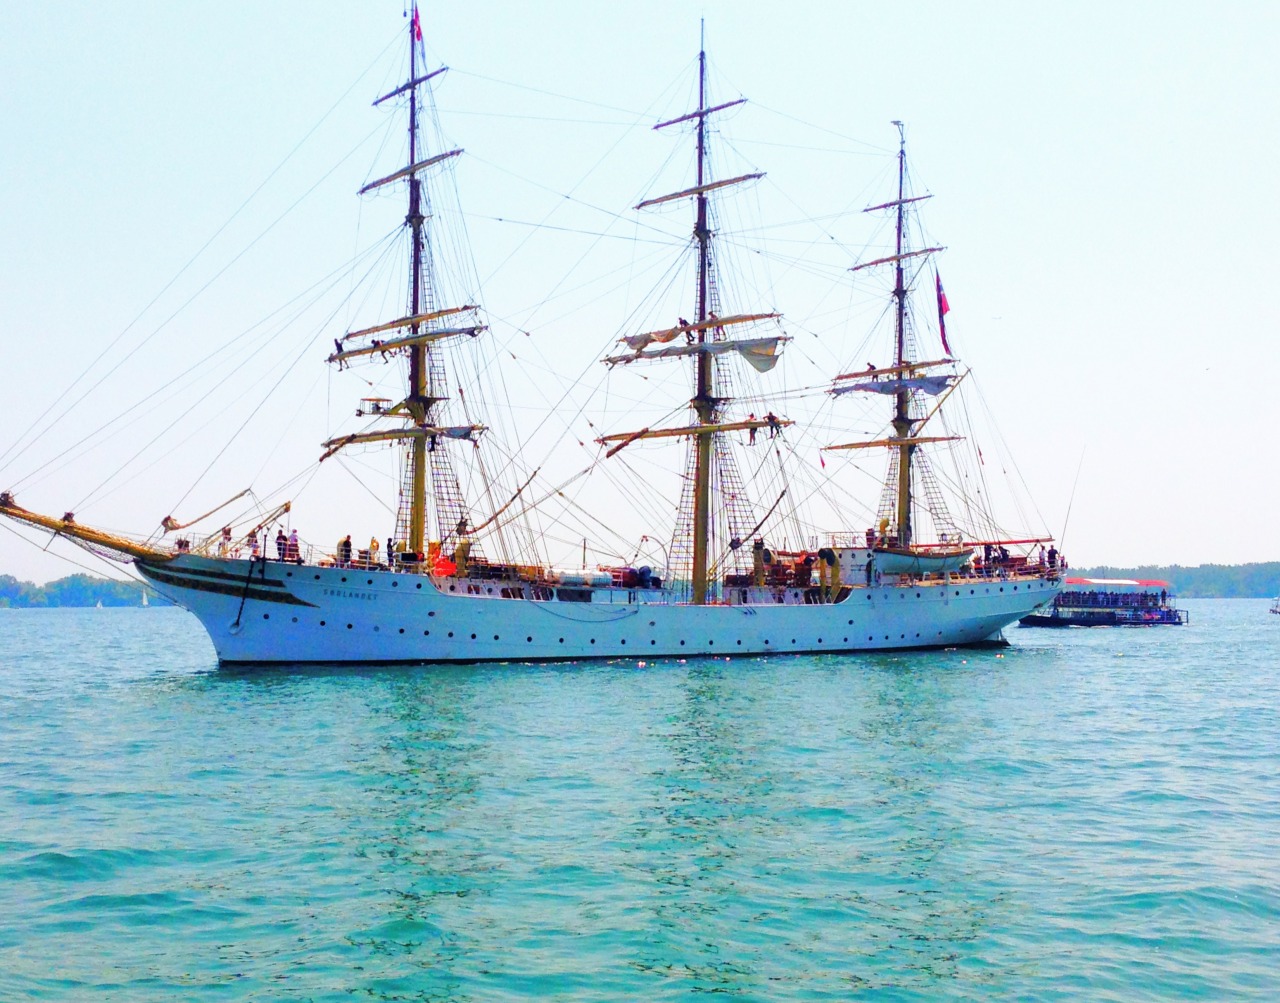 fairytaleprepland:
“the crew in the mast!
”